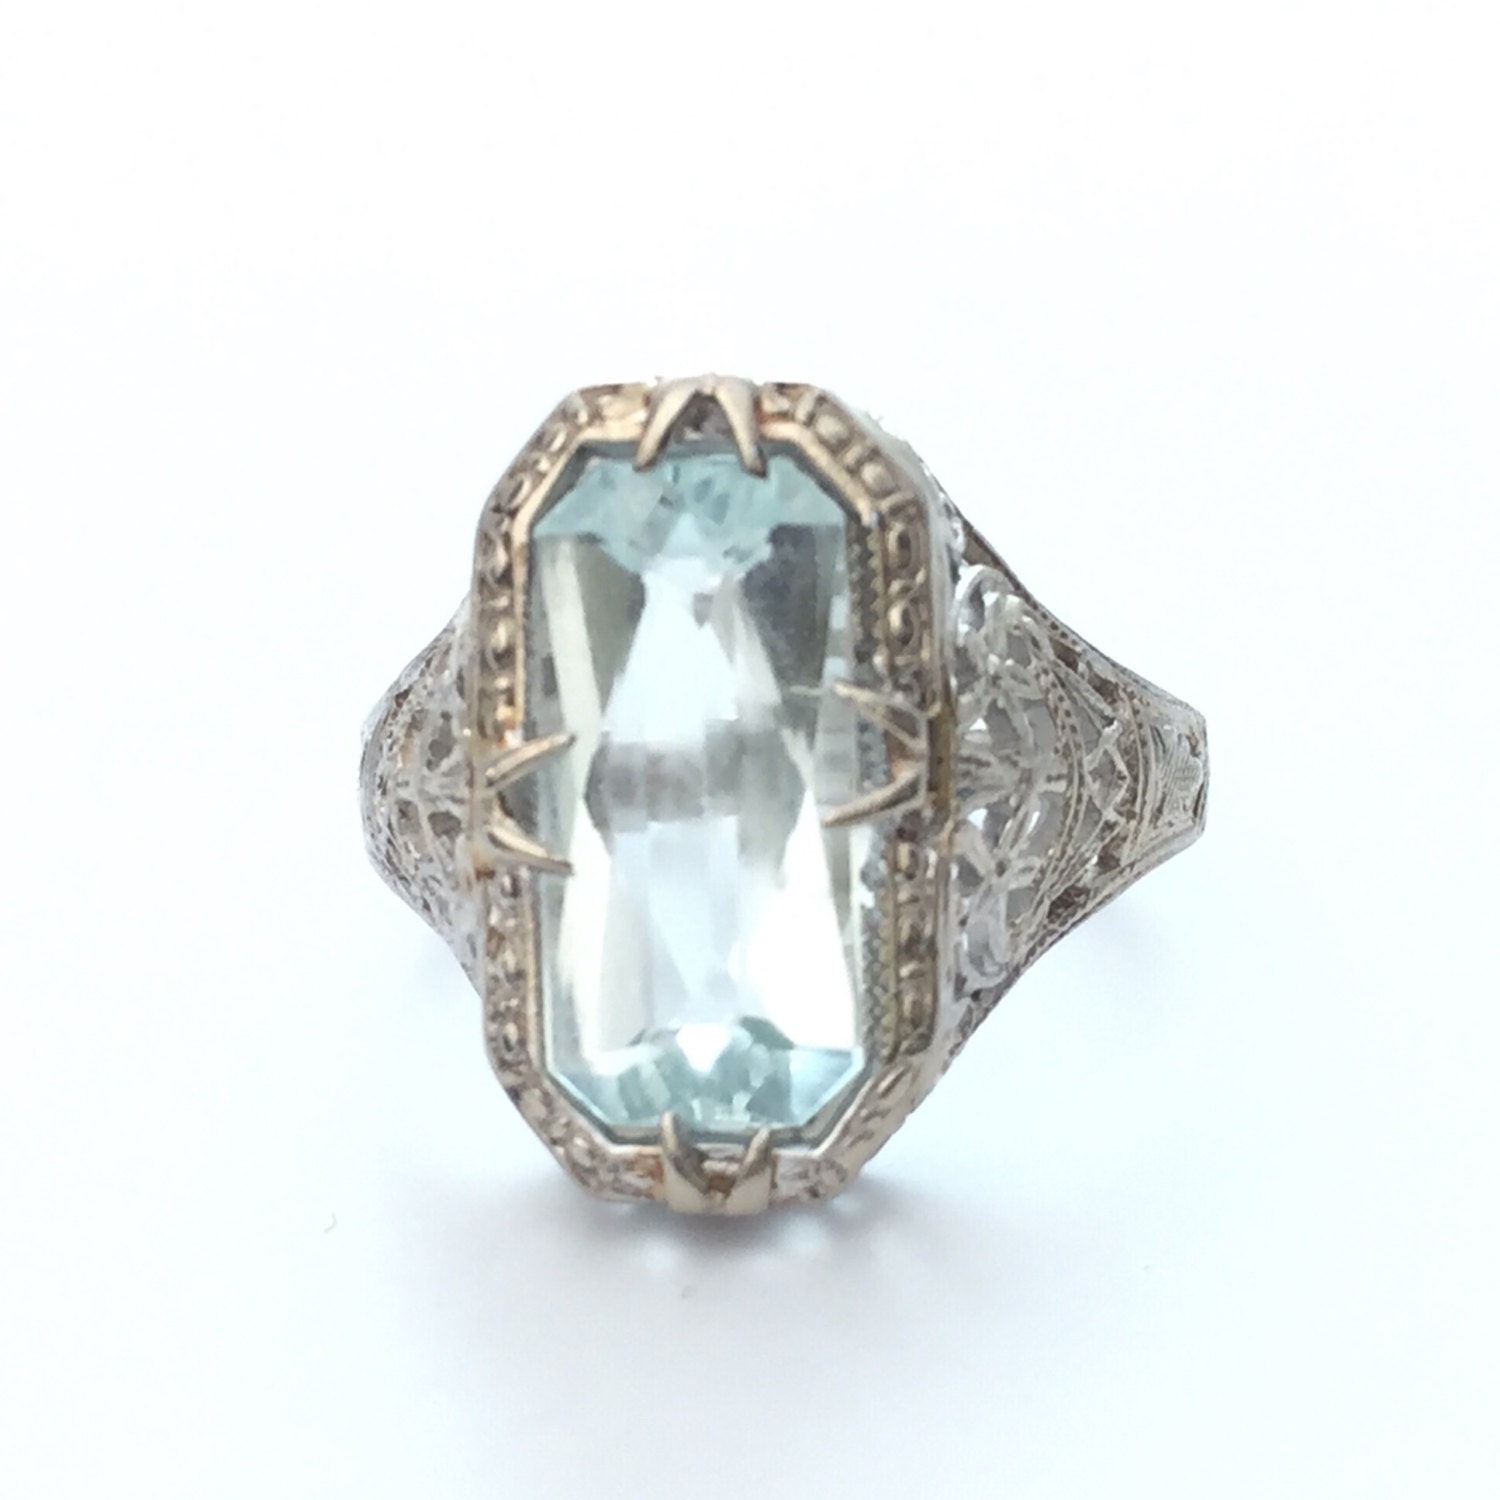 SALE Art Deco Aquamarine Filigree Ring 14k White by BrocktonGems